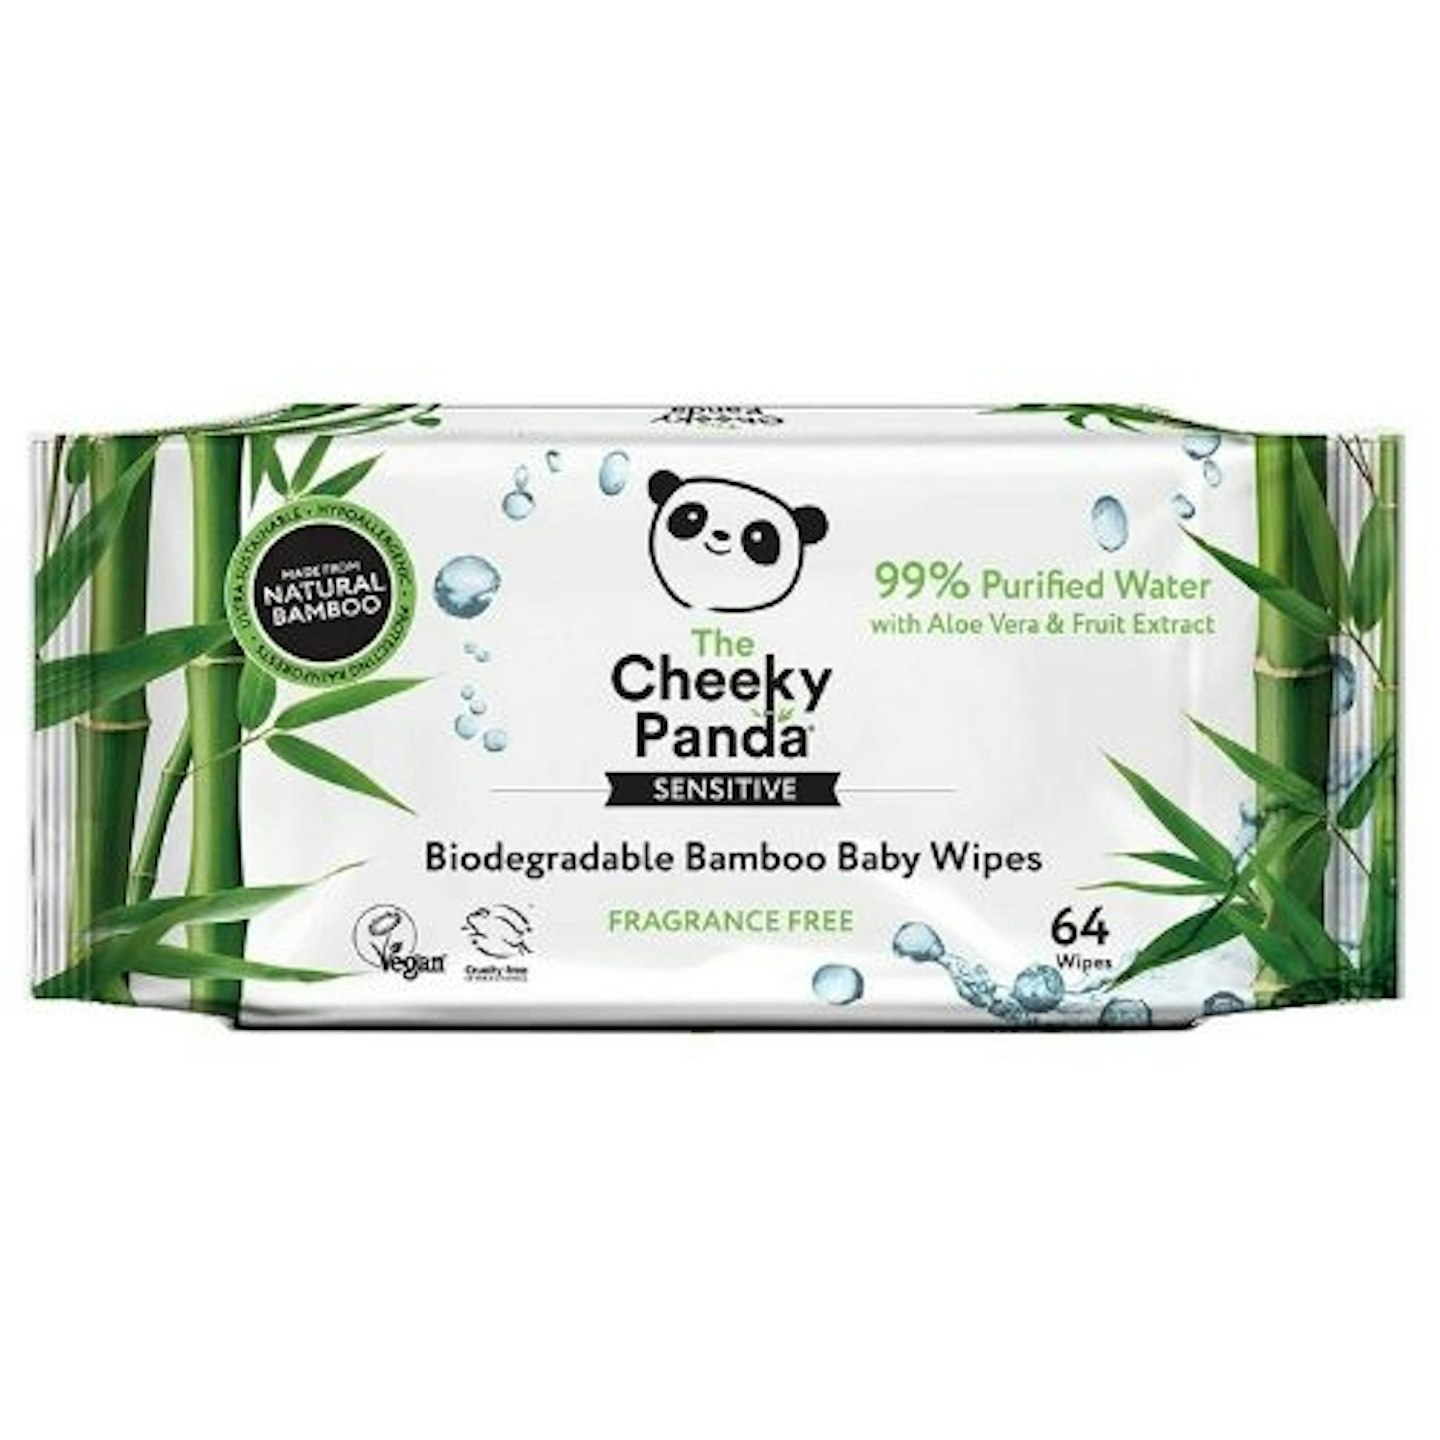 The Cheeky Panda Biodegradable Bamboo Baby Wipes